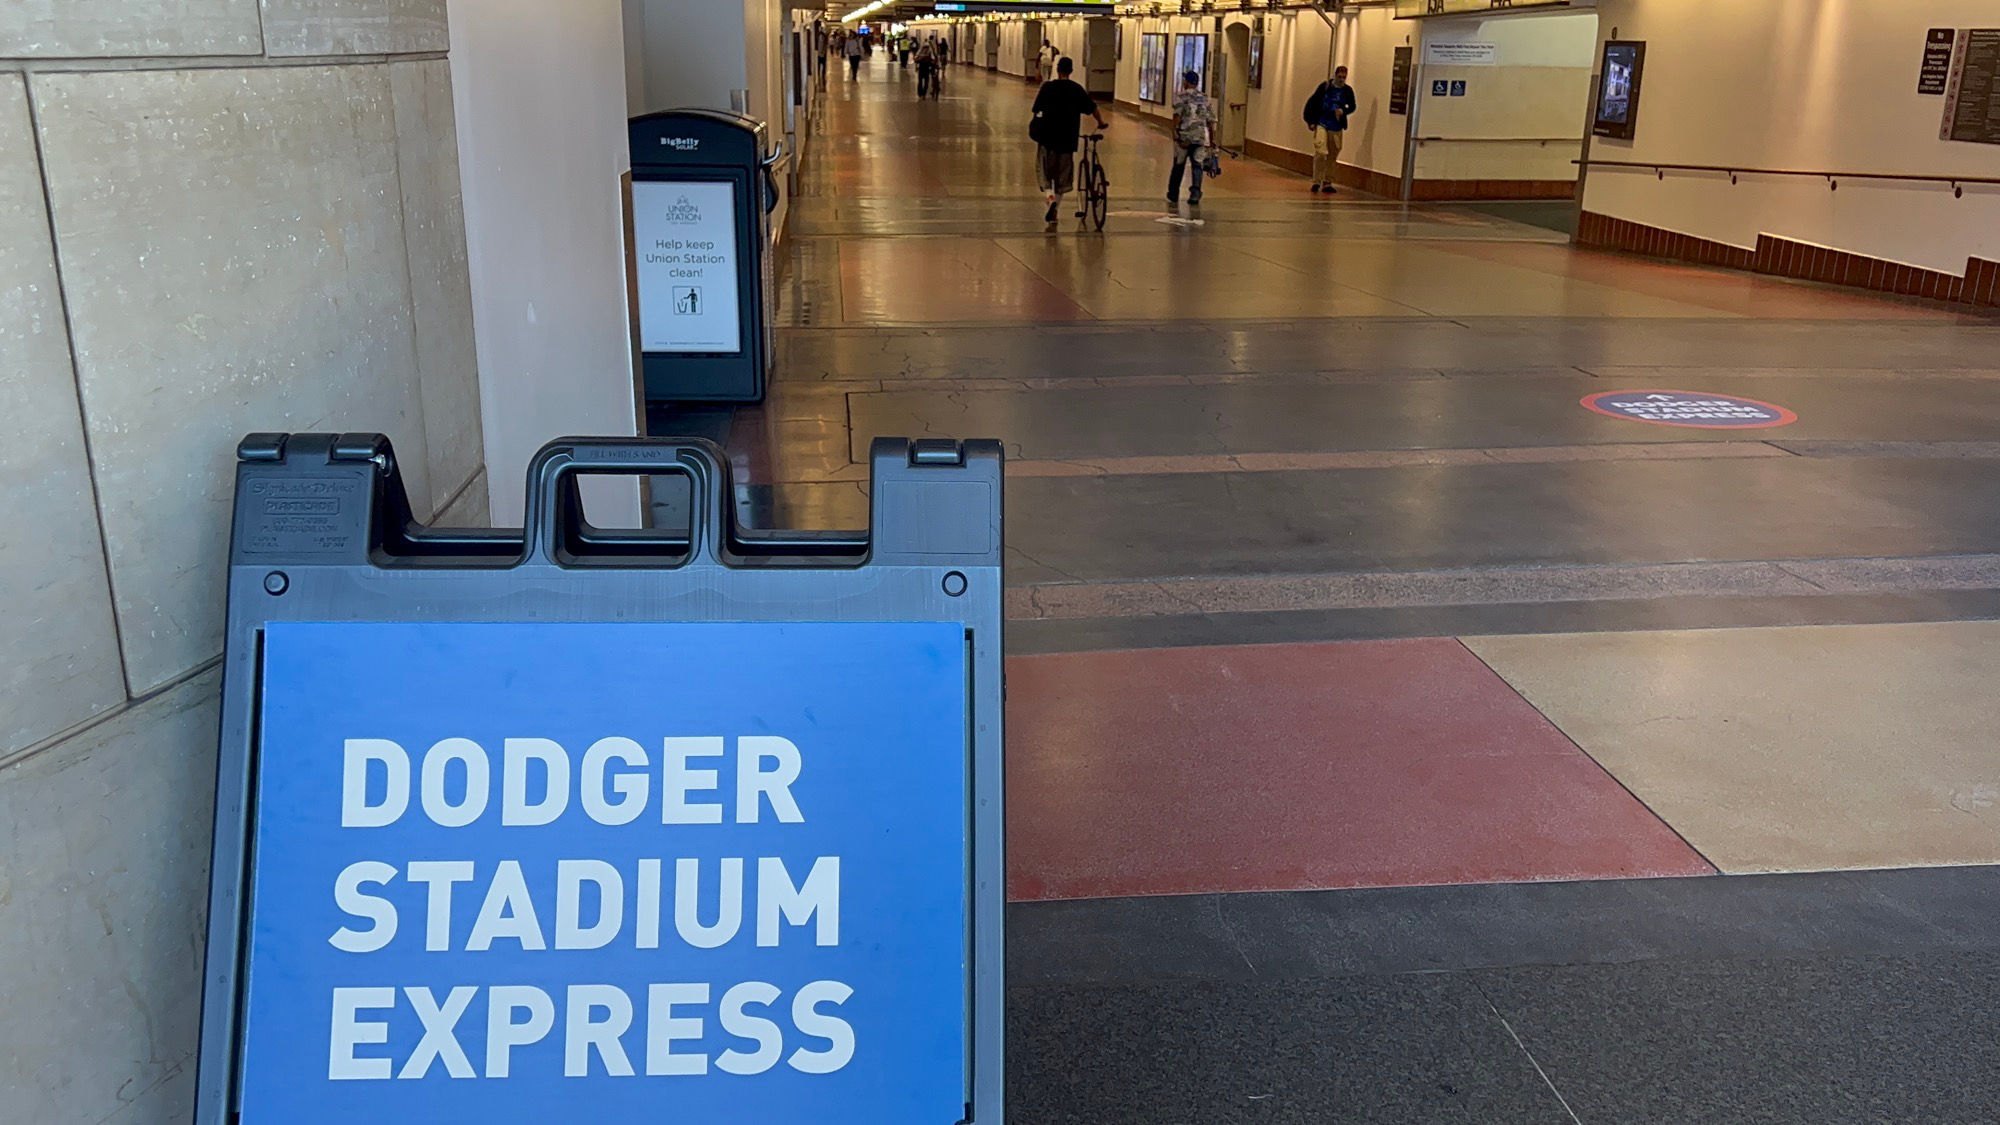 Dodger Stadium Express Union Station Passageway